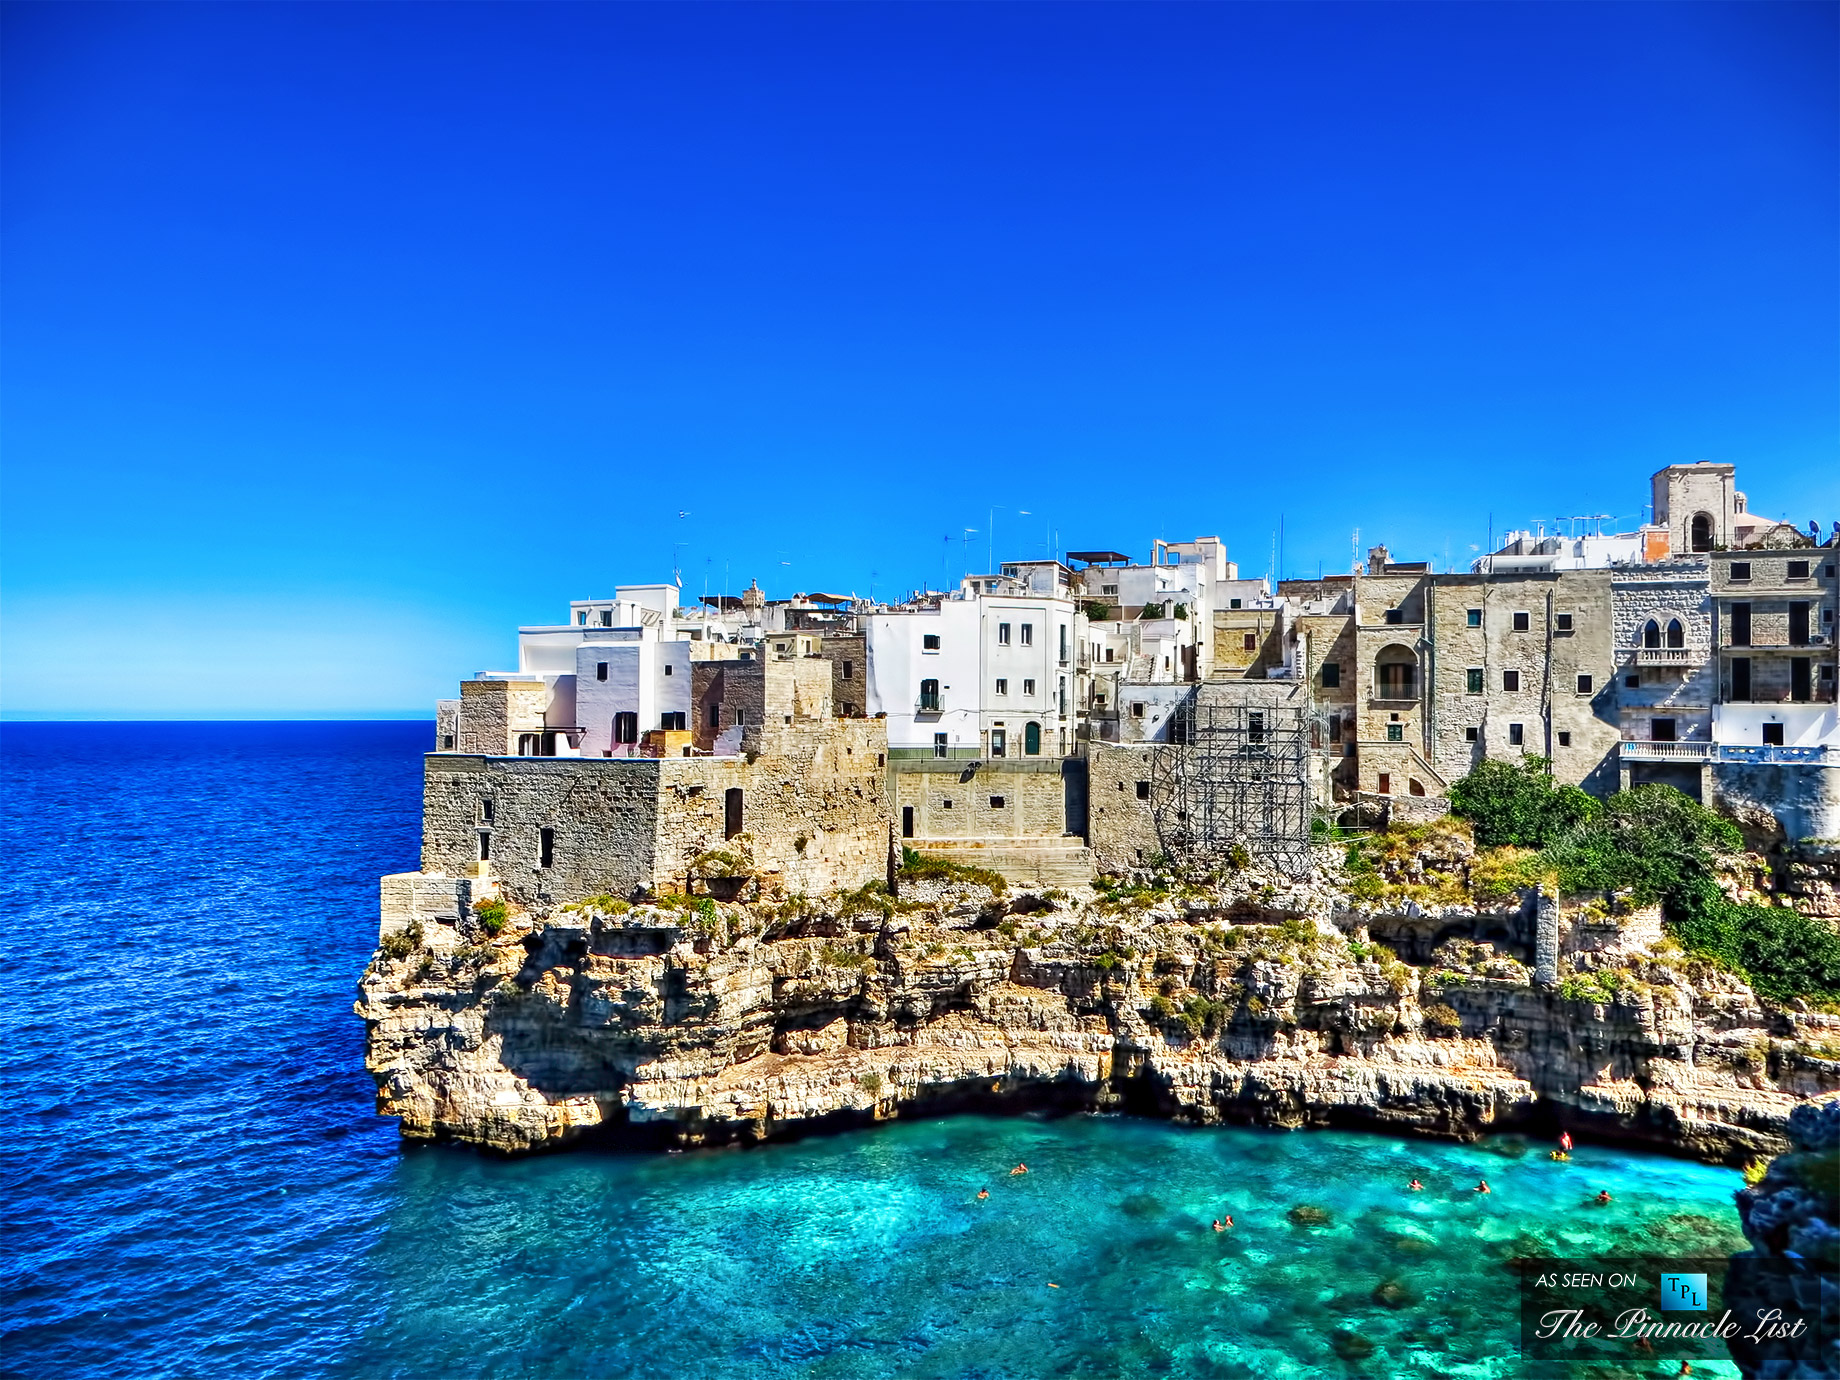 Bandiere blu, ecco le 11 città premiate in Puglia in provincia di Bari grande delusione per una città